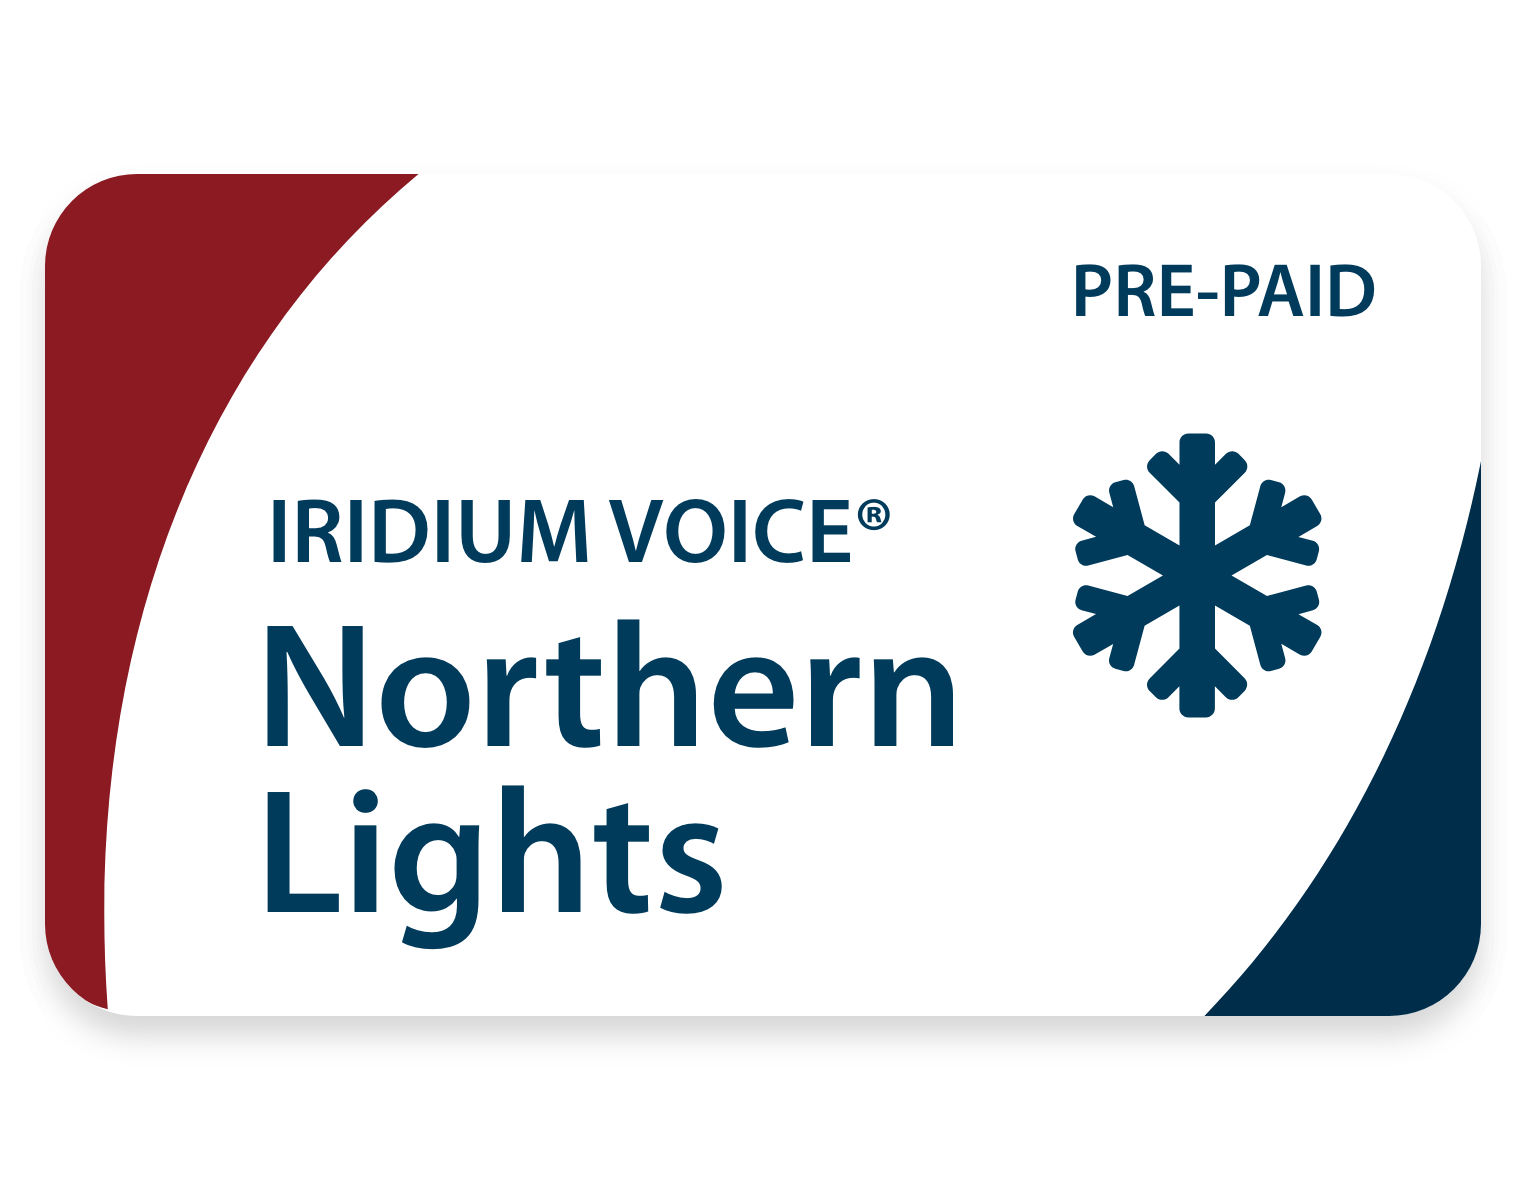 Iridium voice pre-paid northern lights airtime plan